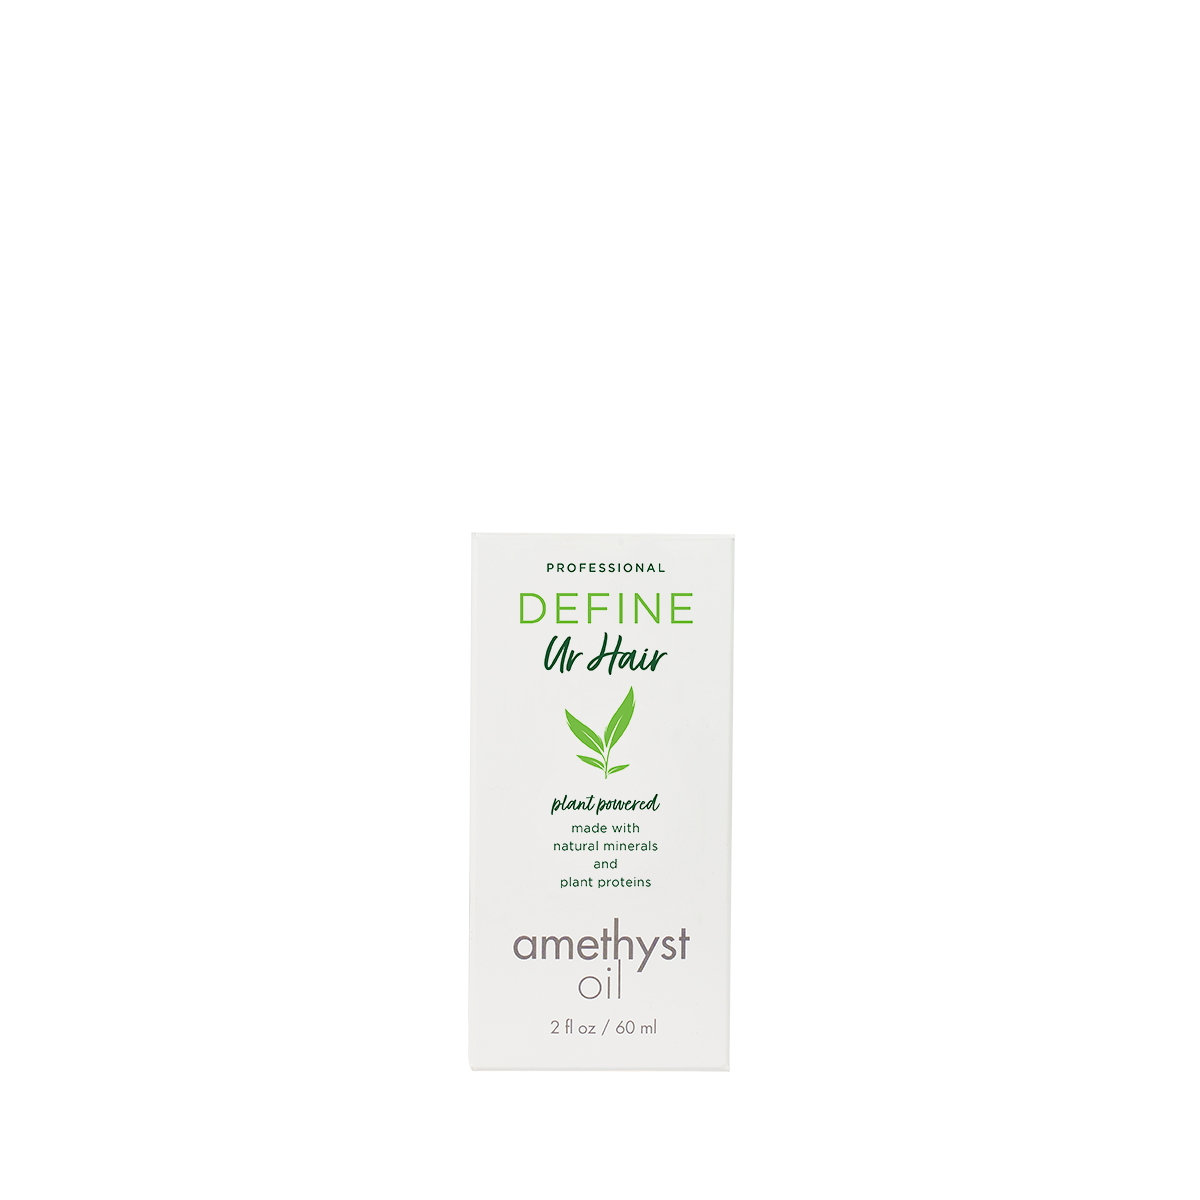 Product image of amethyst oil by Define Ur Hair